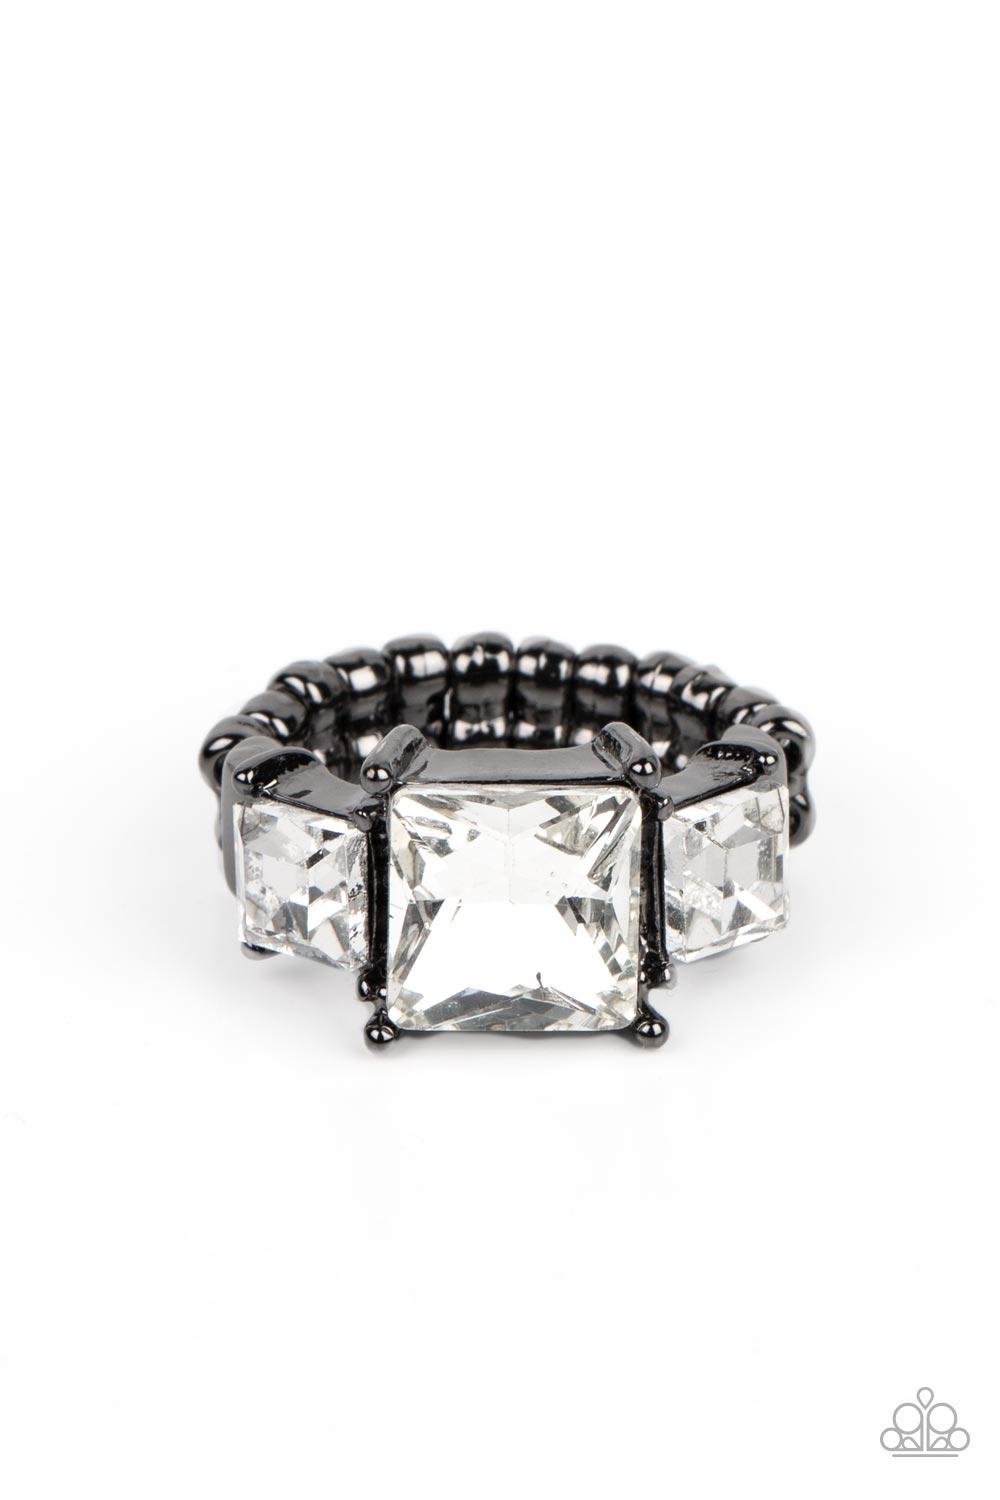 Treasured Twinkle Gunmetal Black &amp; White Rhinestone Ring - Paparazzi Accessories- lightbox - CarasShop.com - $5 Jewelry by Cara Jewels